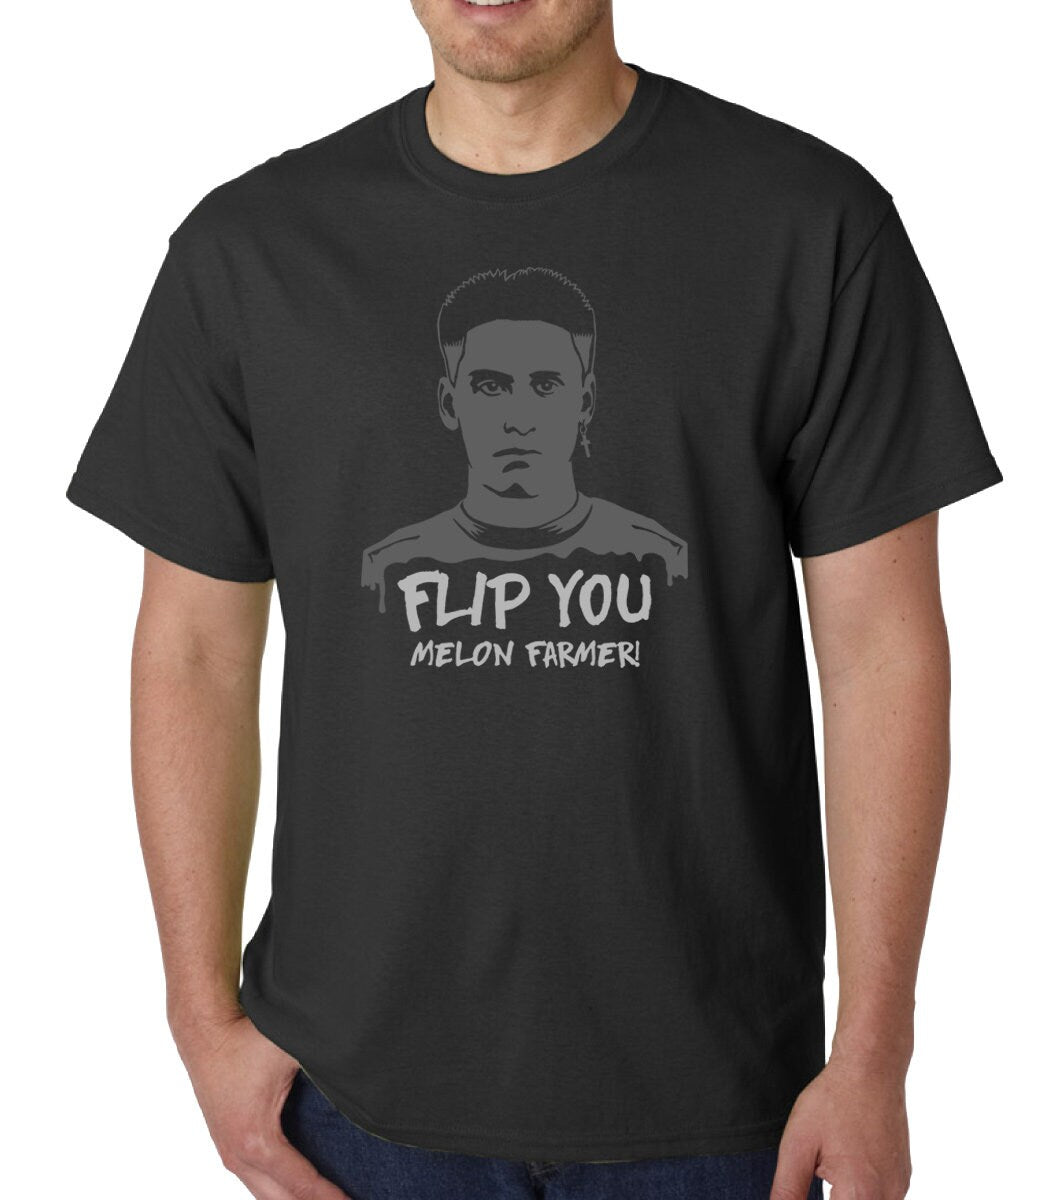 Flip You Melon Farmer! t-shirt